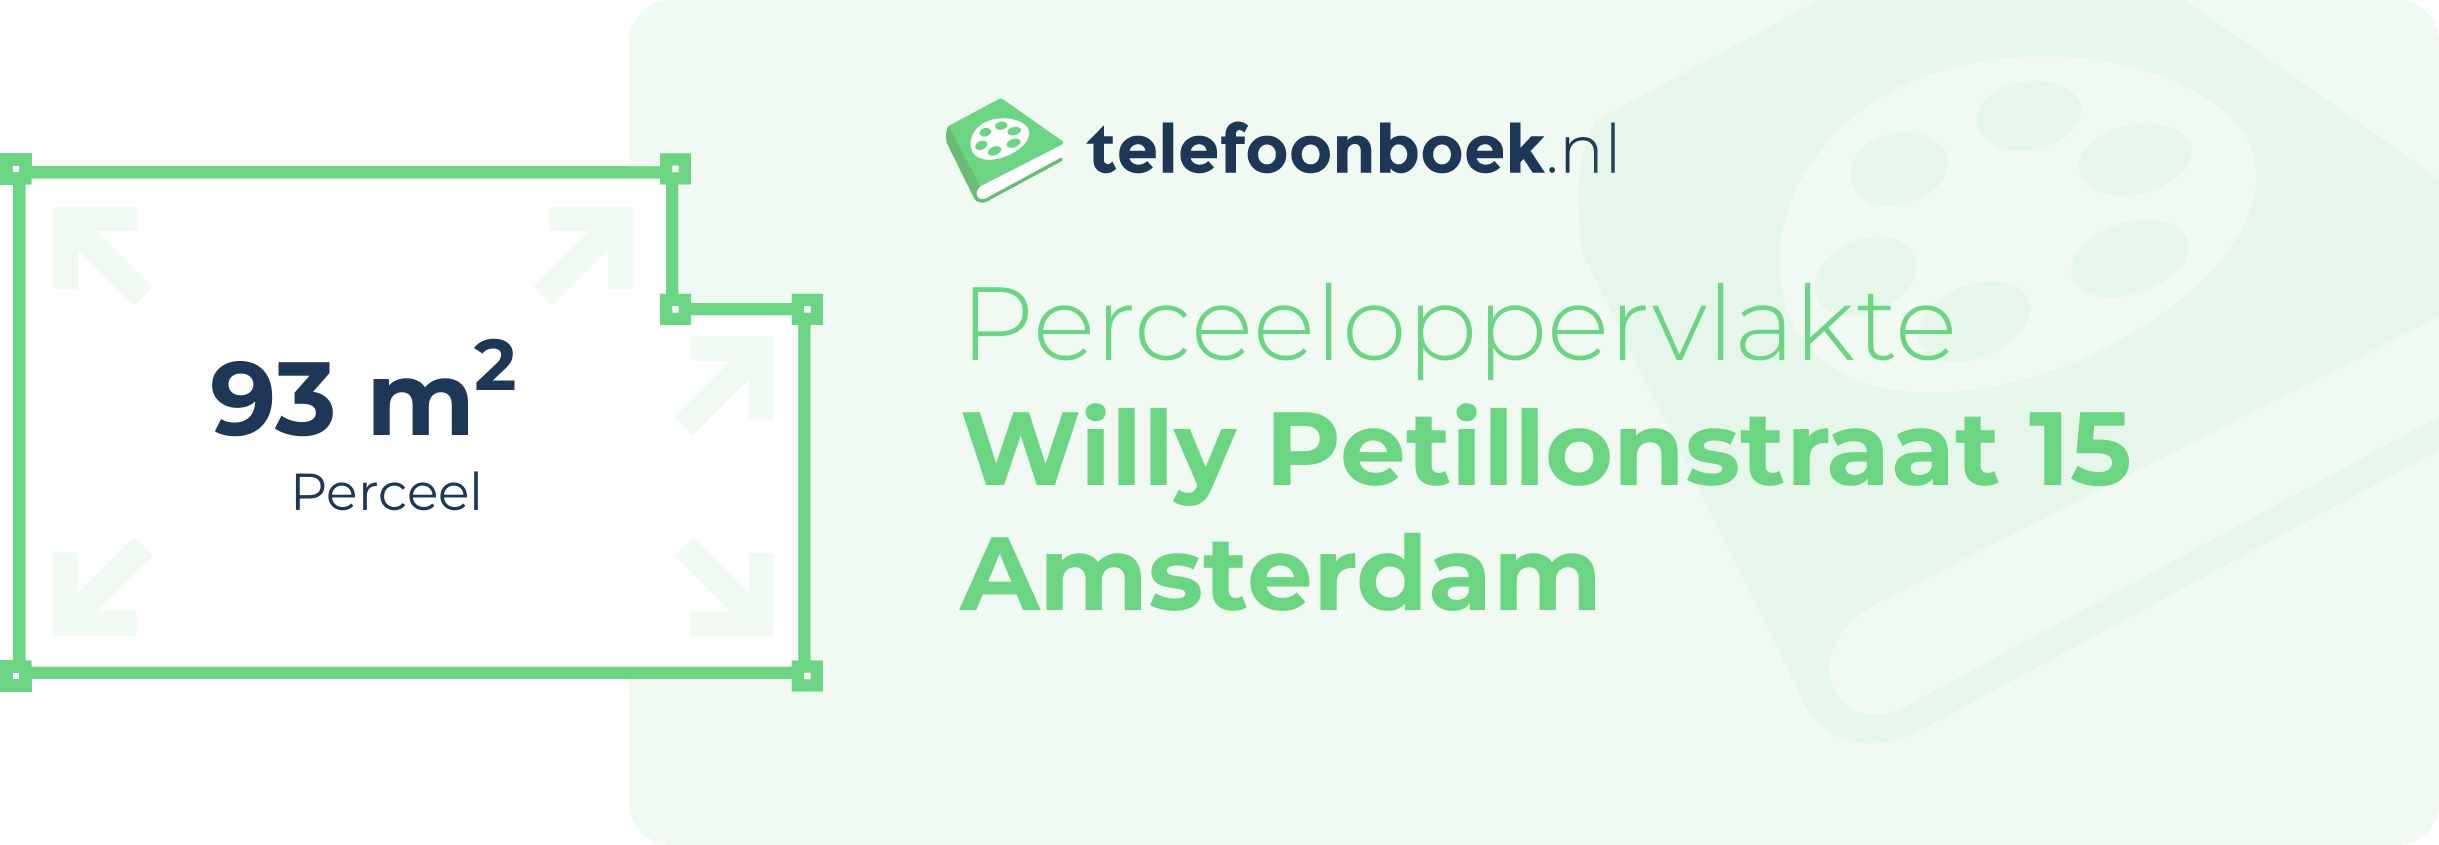 Perceeloppervlakte Willy Petillonstraat 15 Amsterdam